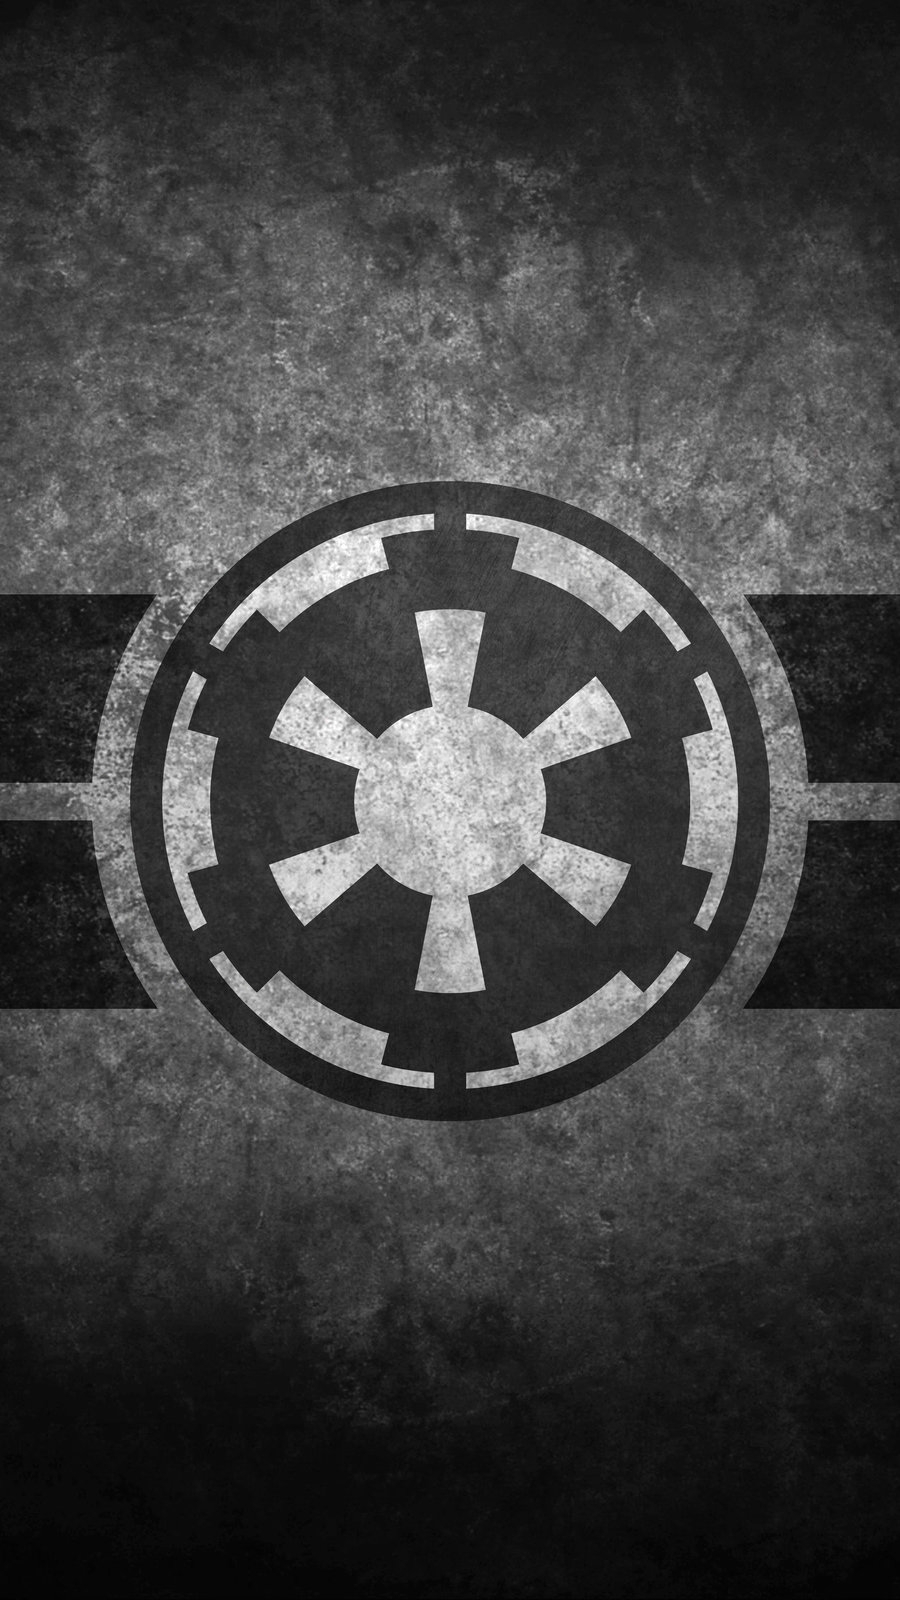 10 Most Popular Star Wars Imperial Logo Wallpaper FULL HD 1920×1080 For